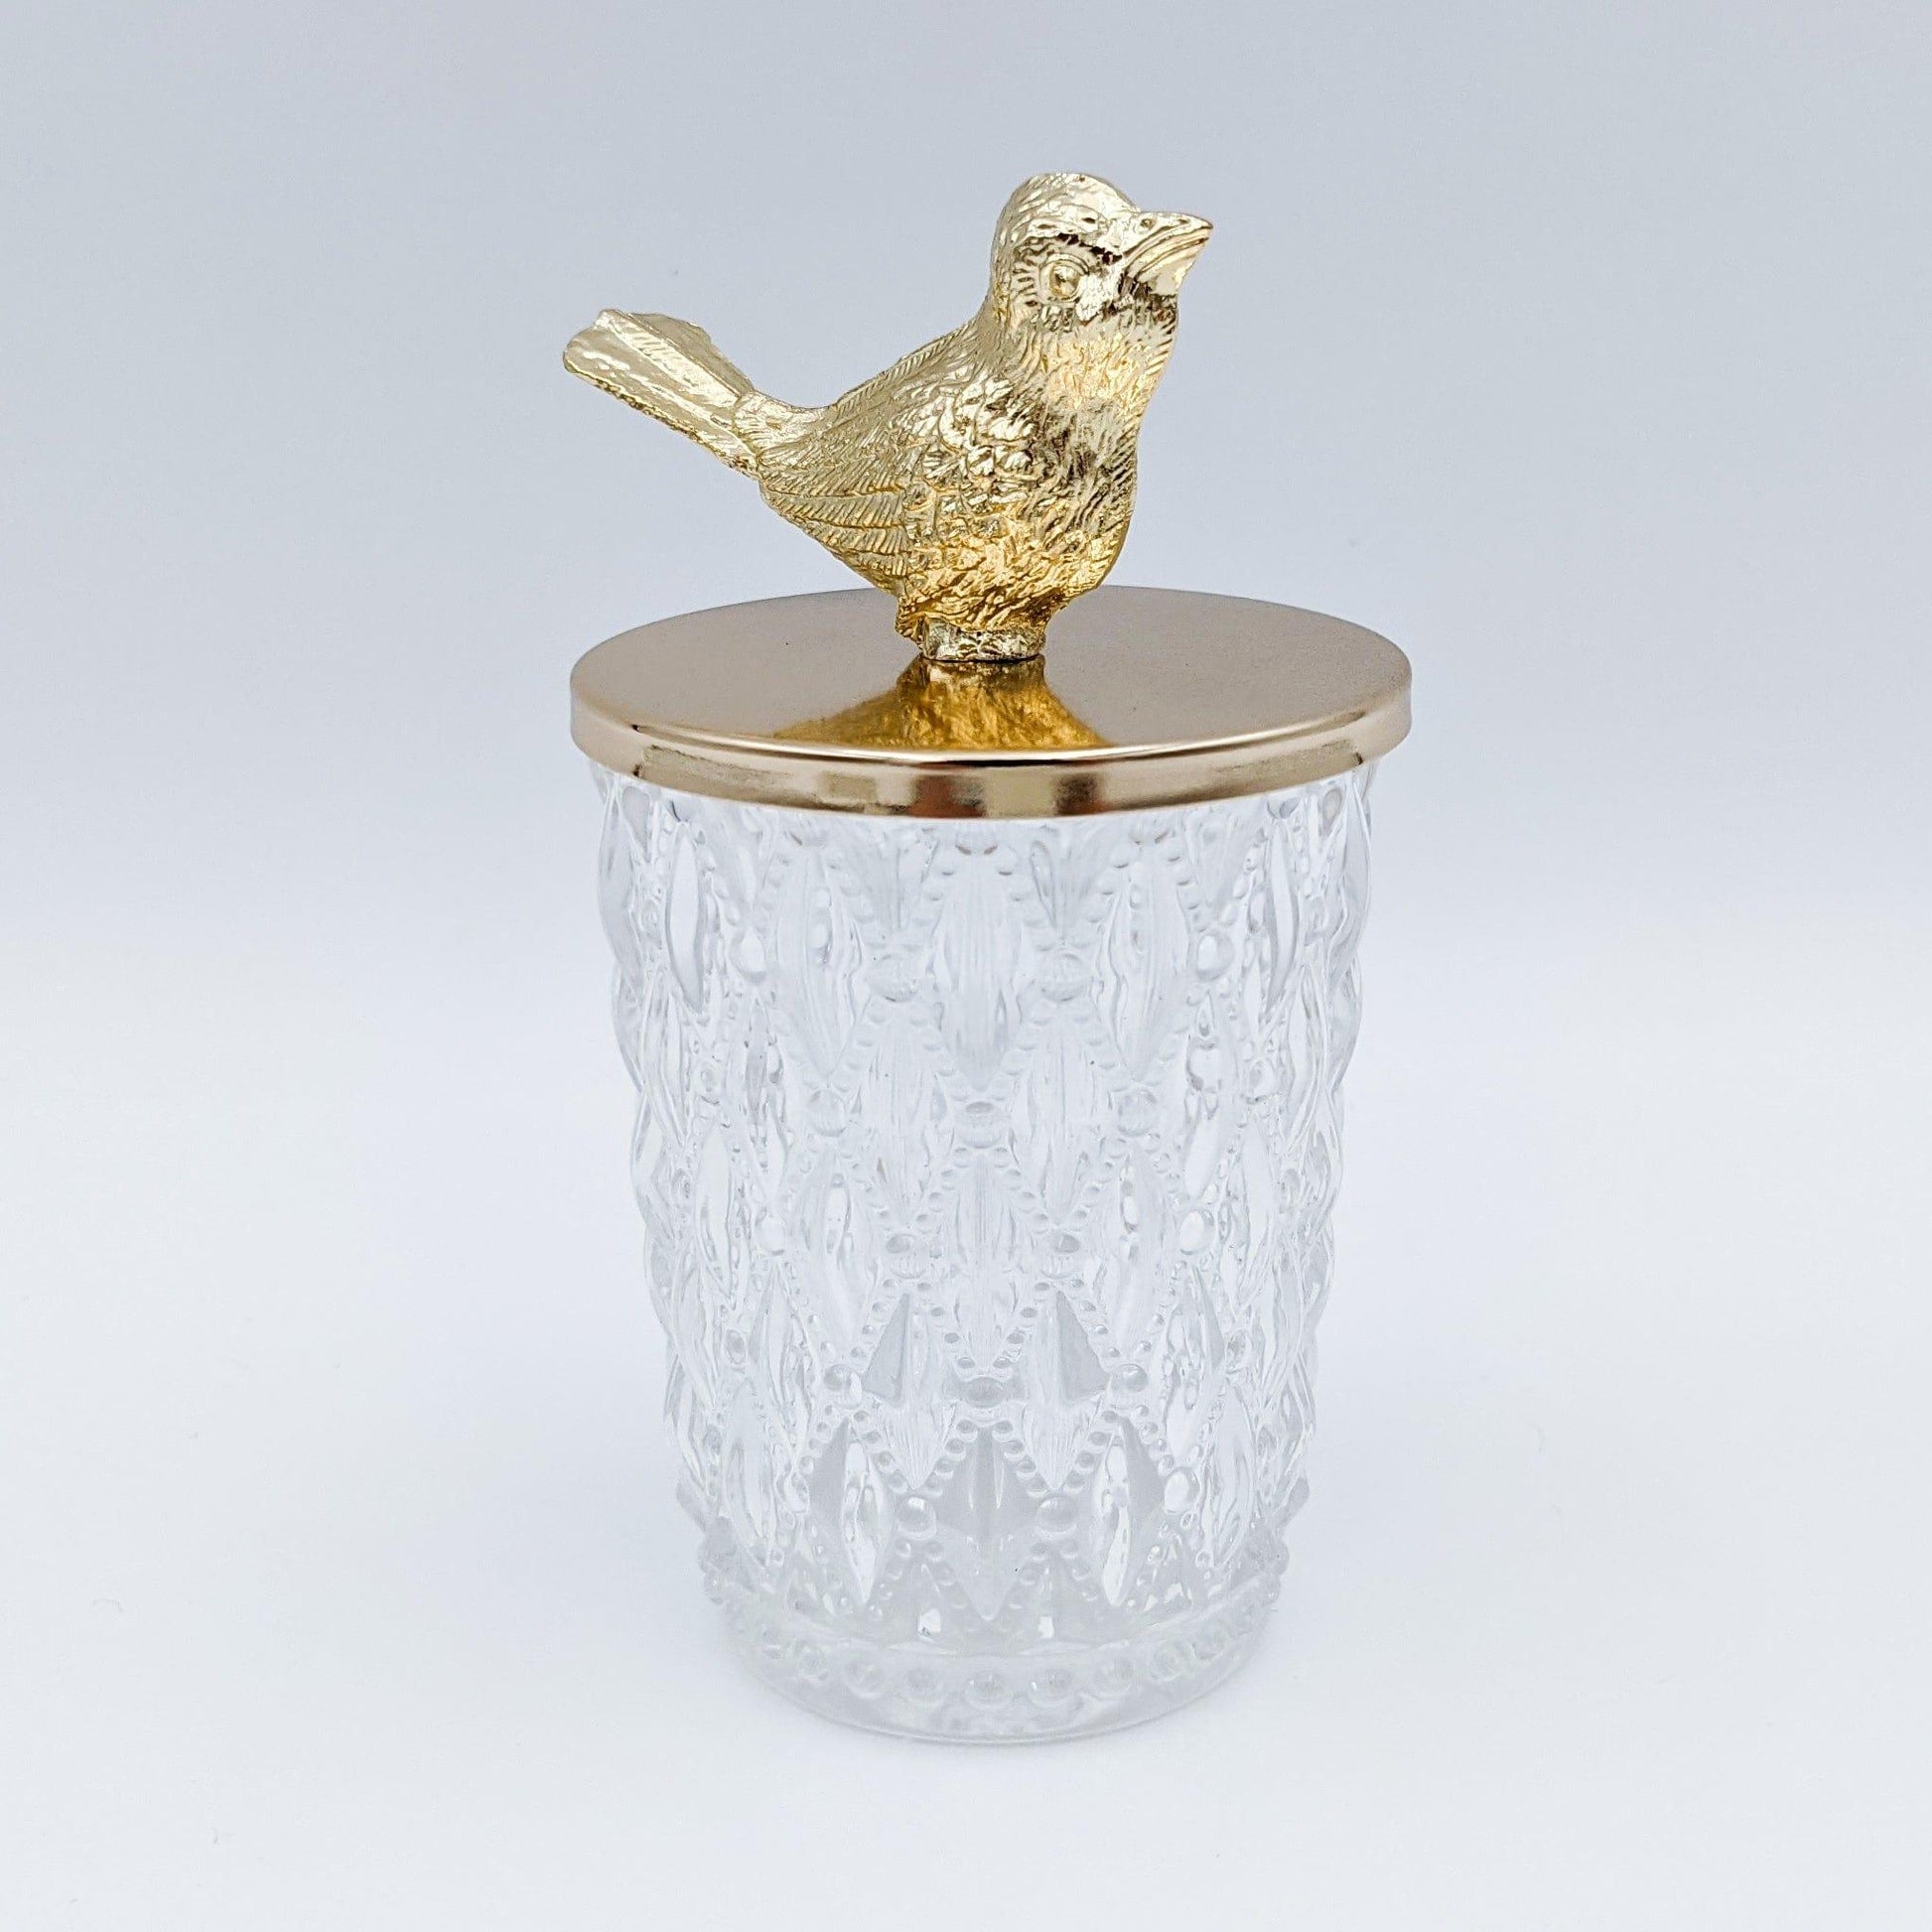 House Journey Jar Small 13cm Gold Bird Diamond Glass Jar